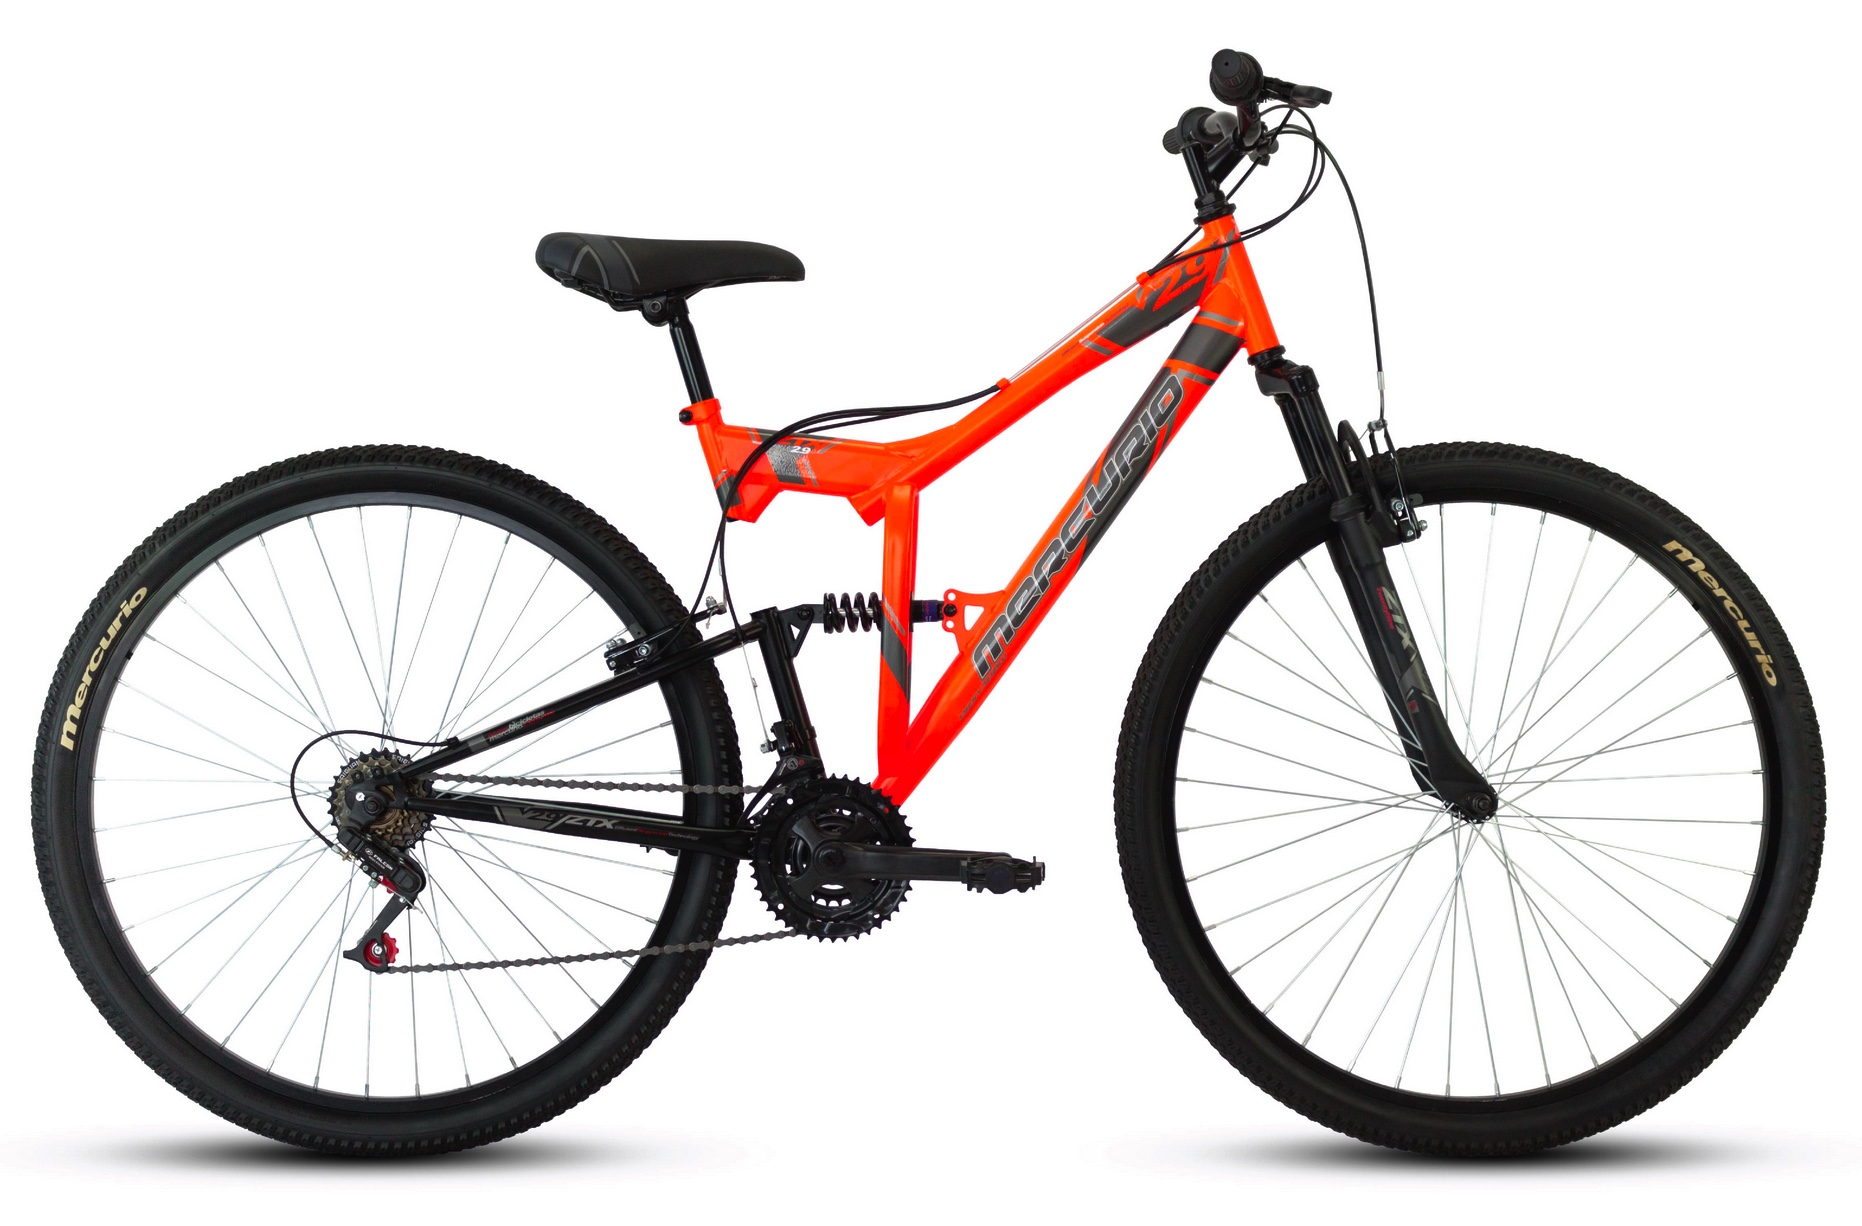 Oferta Ilimitada Bicicleta Mercurio DH ZTX 29 Naranja 2020